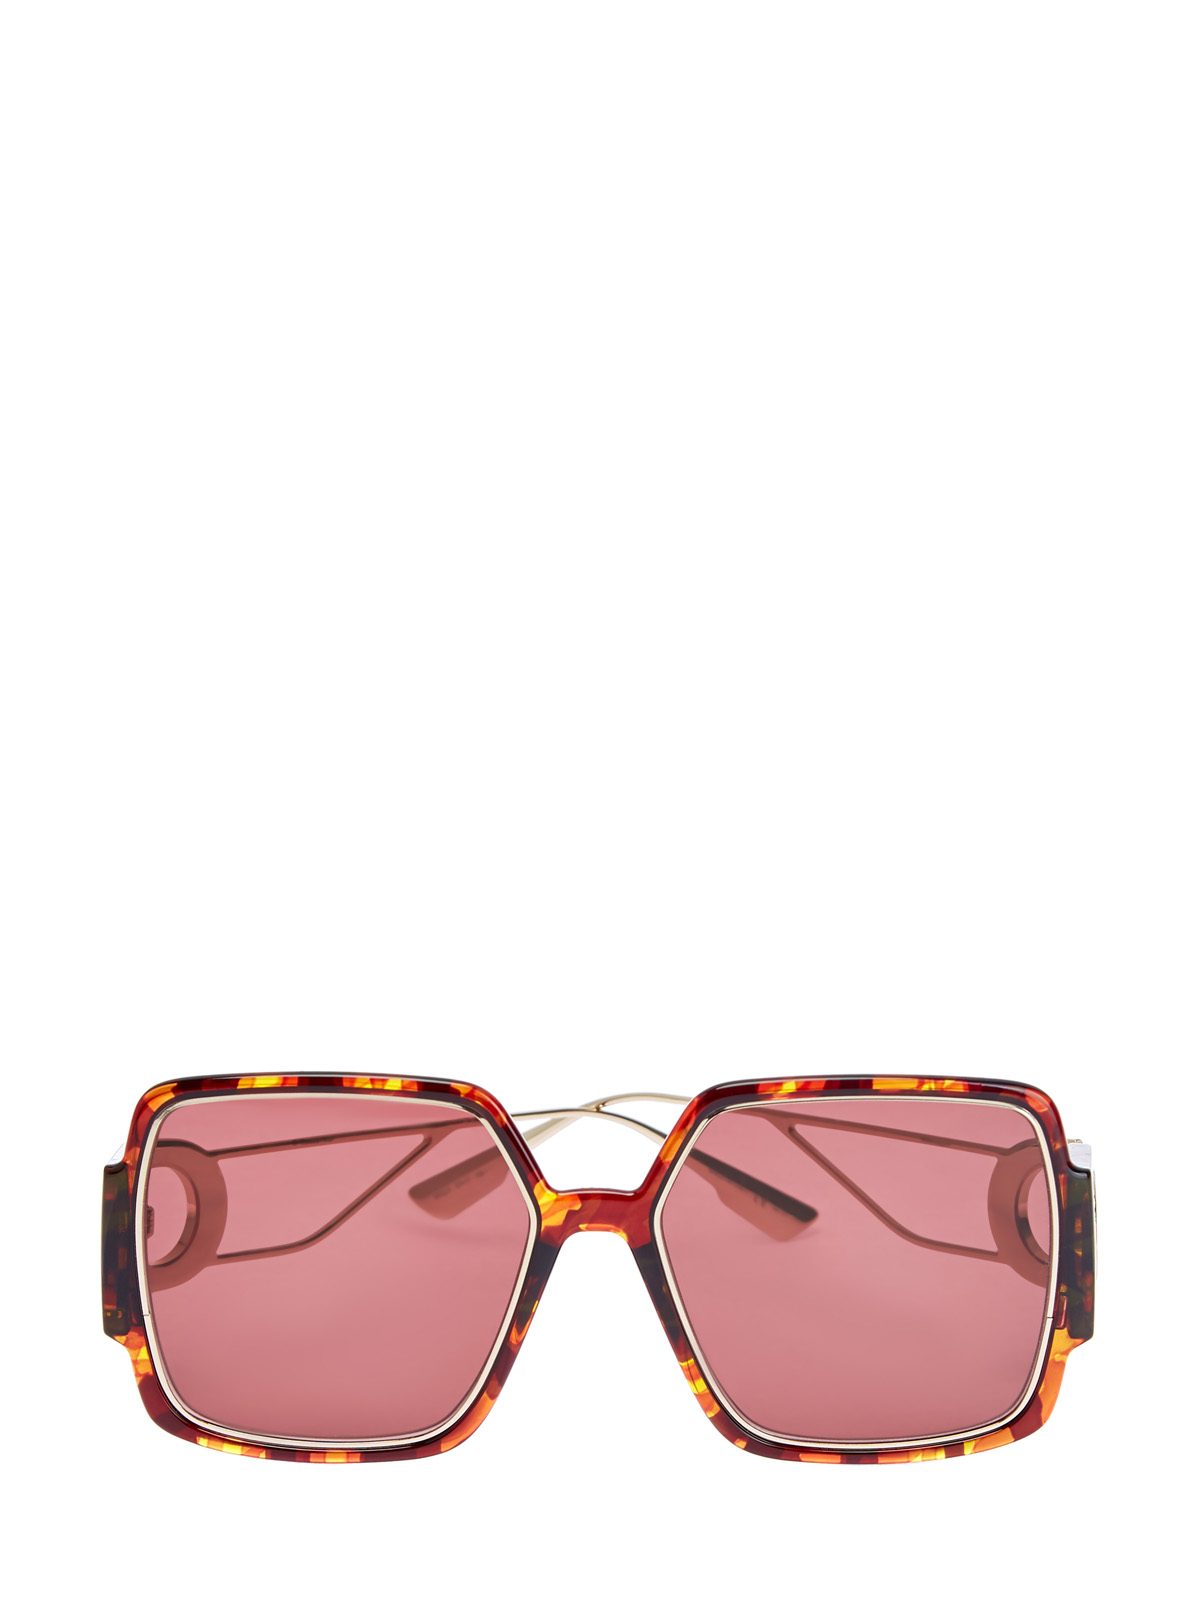 Oversize-очки 30Montaigne2 в стиле 70-х DIOR (sunglasses) women, цвет коричневый, размер 5;5.5;6;6.5;7;7.5;8;9;10